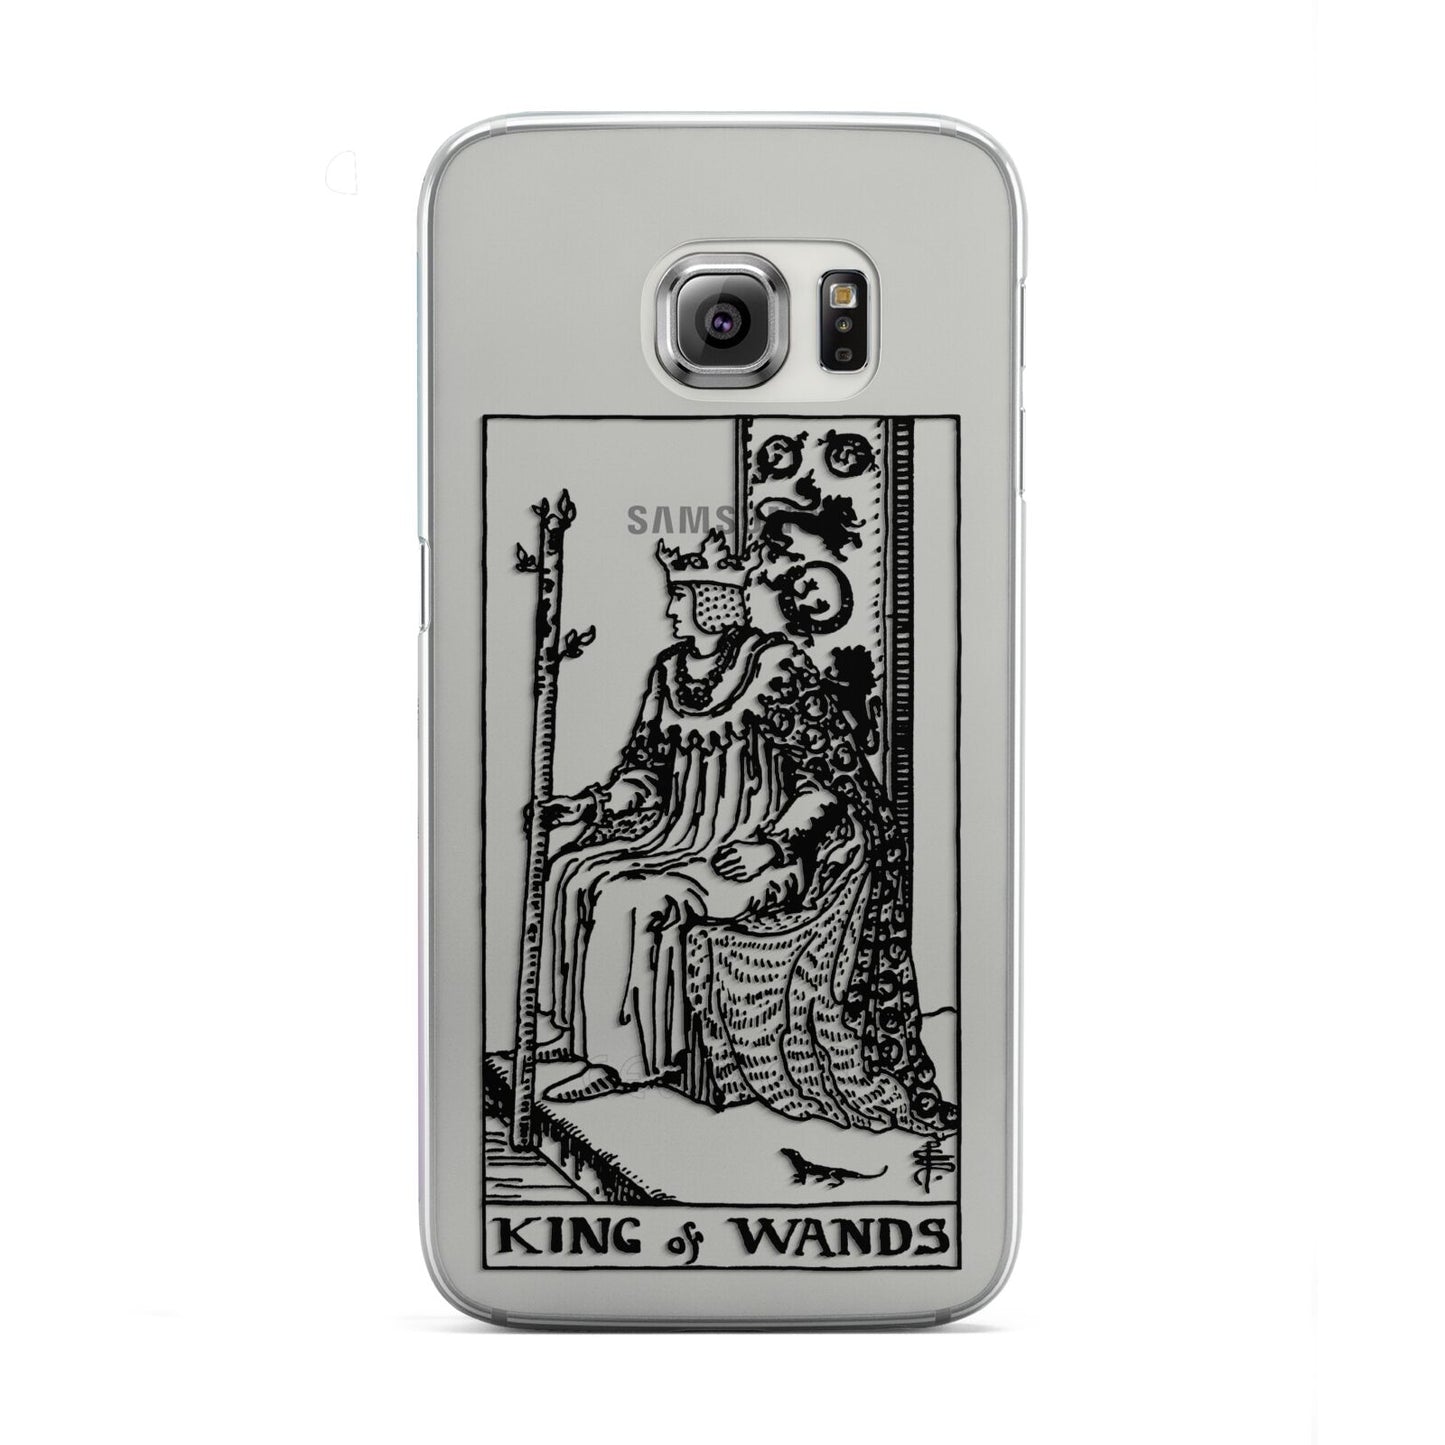 King of Wands Monochrome Samsung Galaxy S6 Edge Case